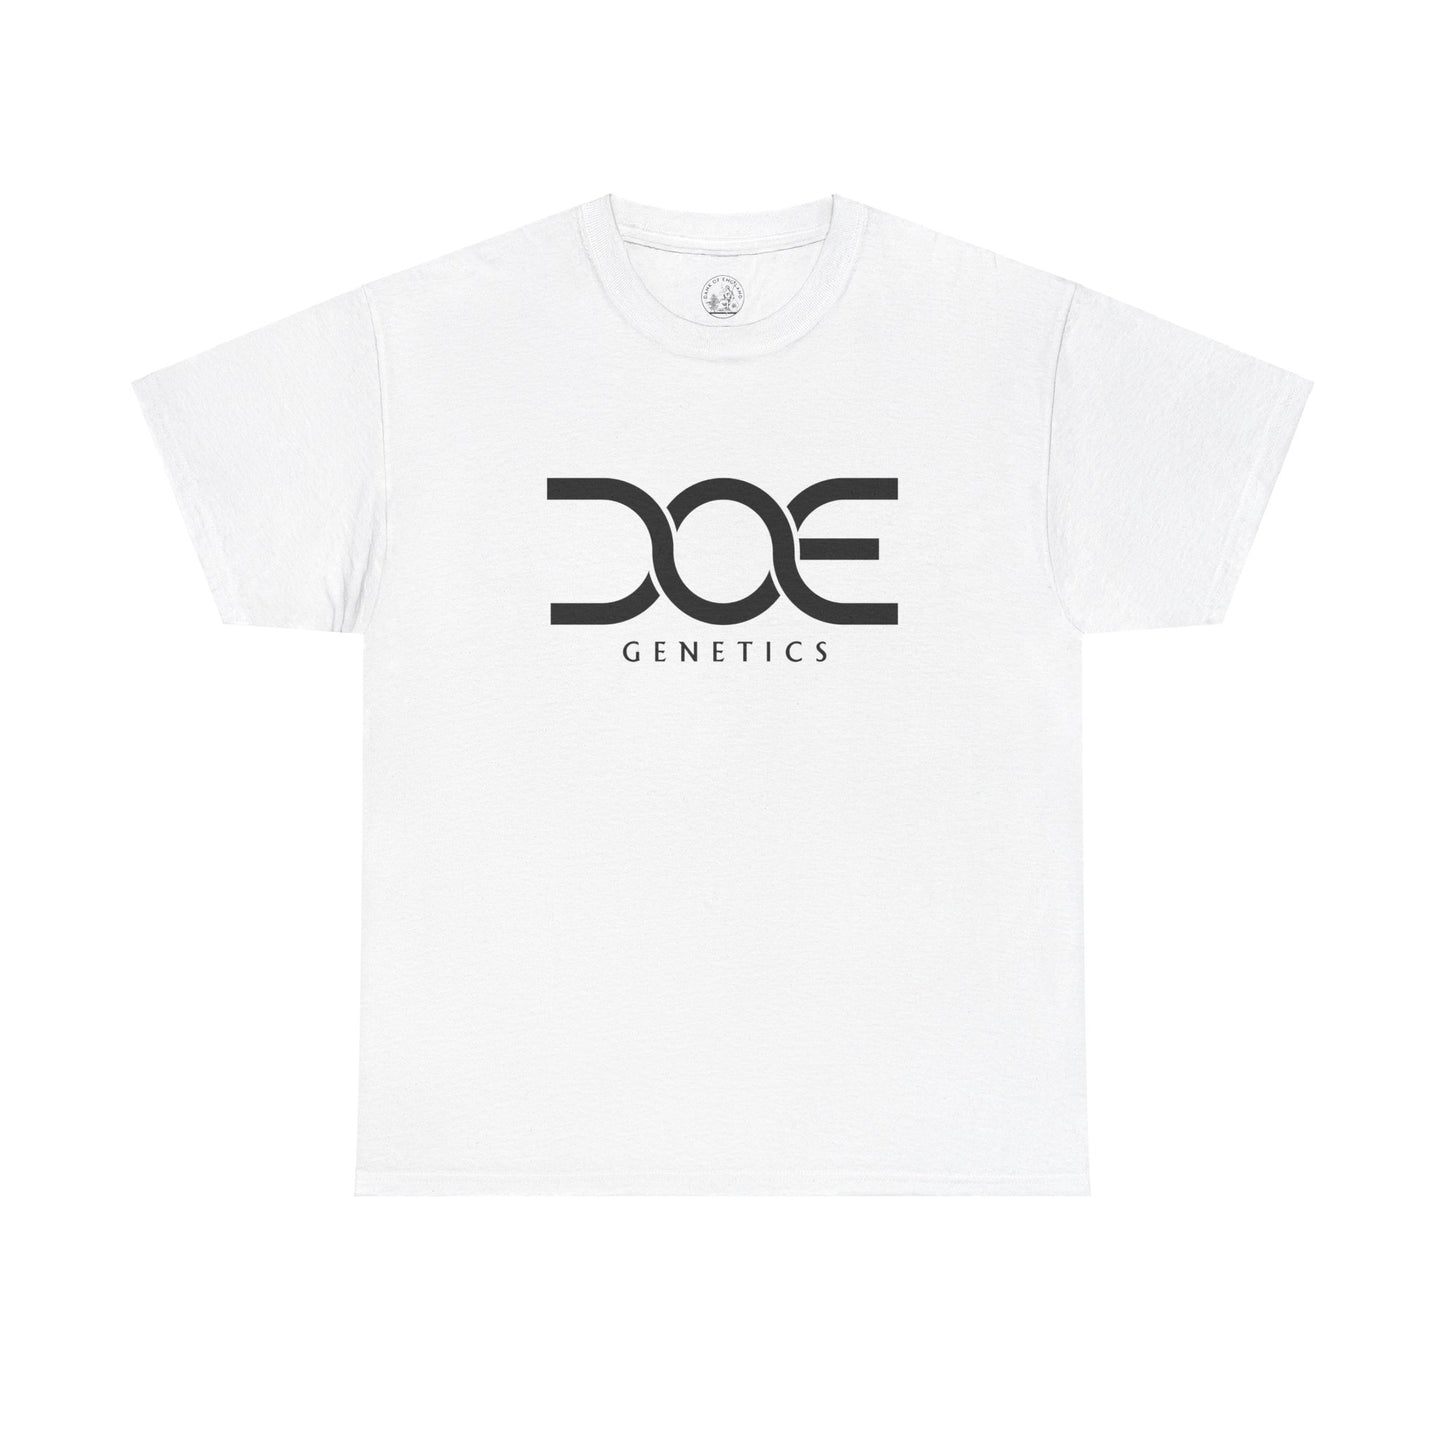 DOE Genetics T-Shirt